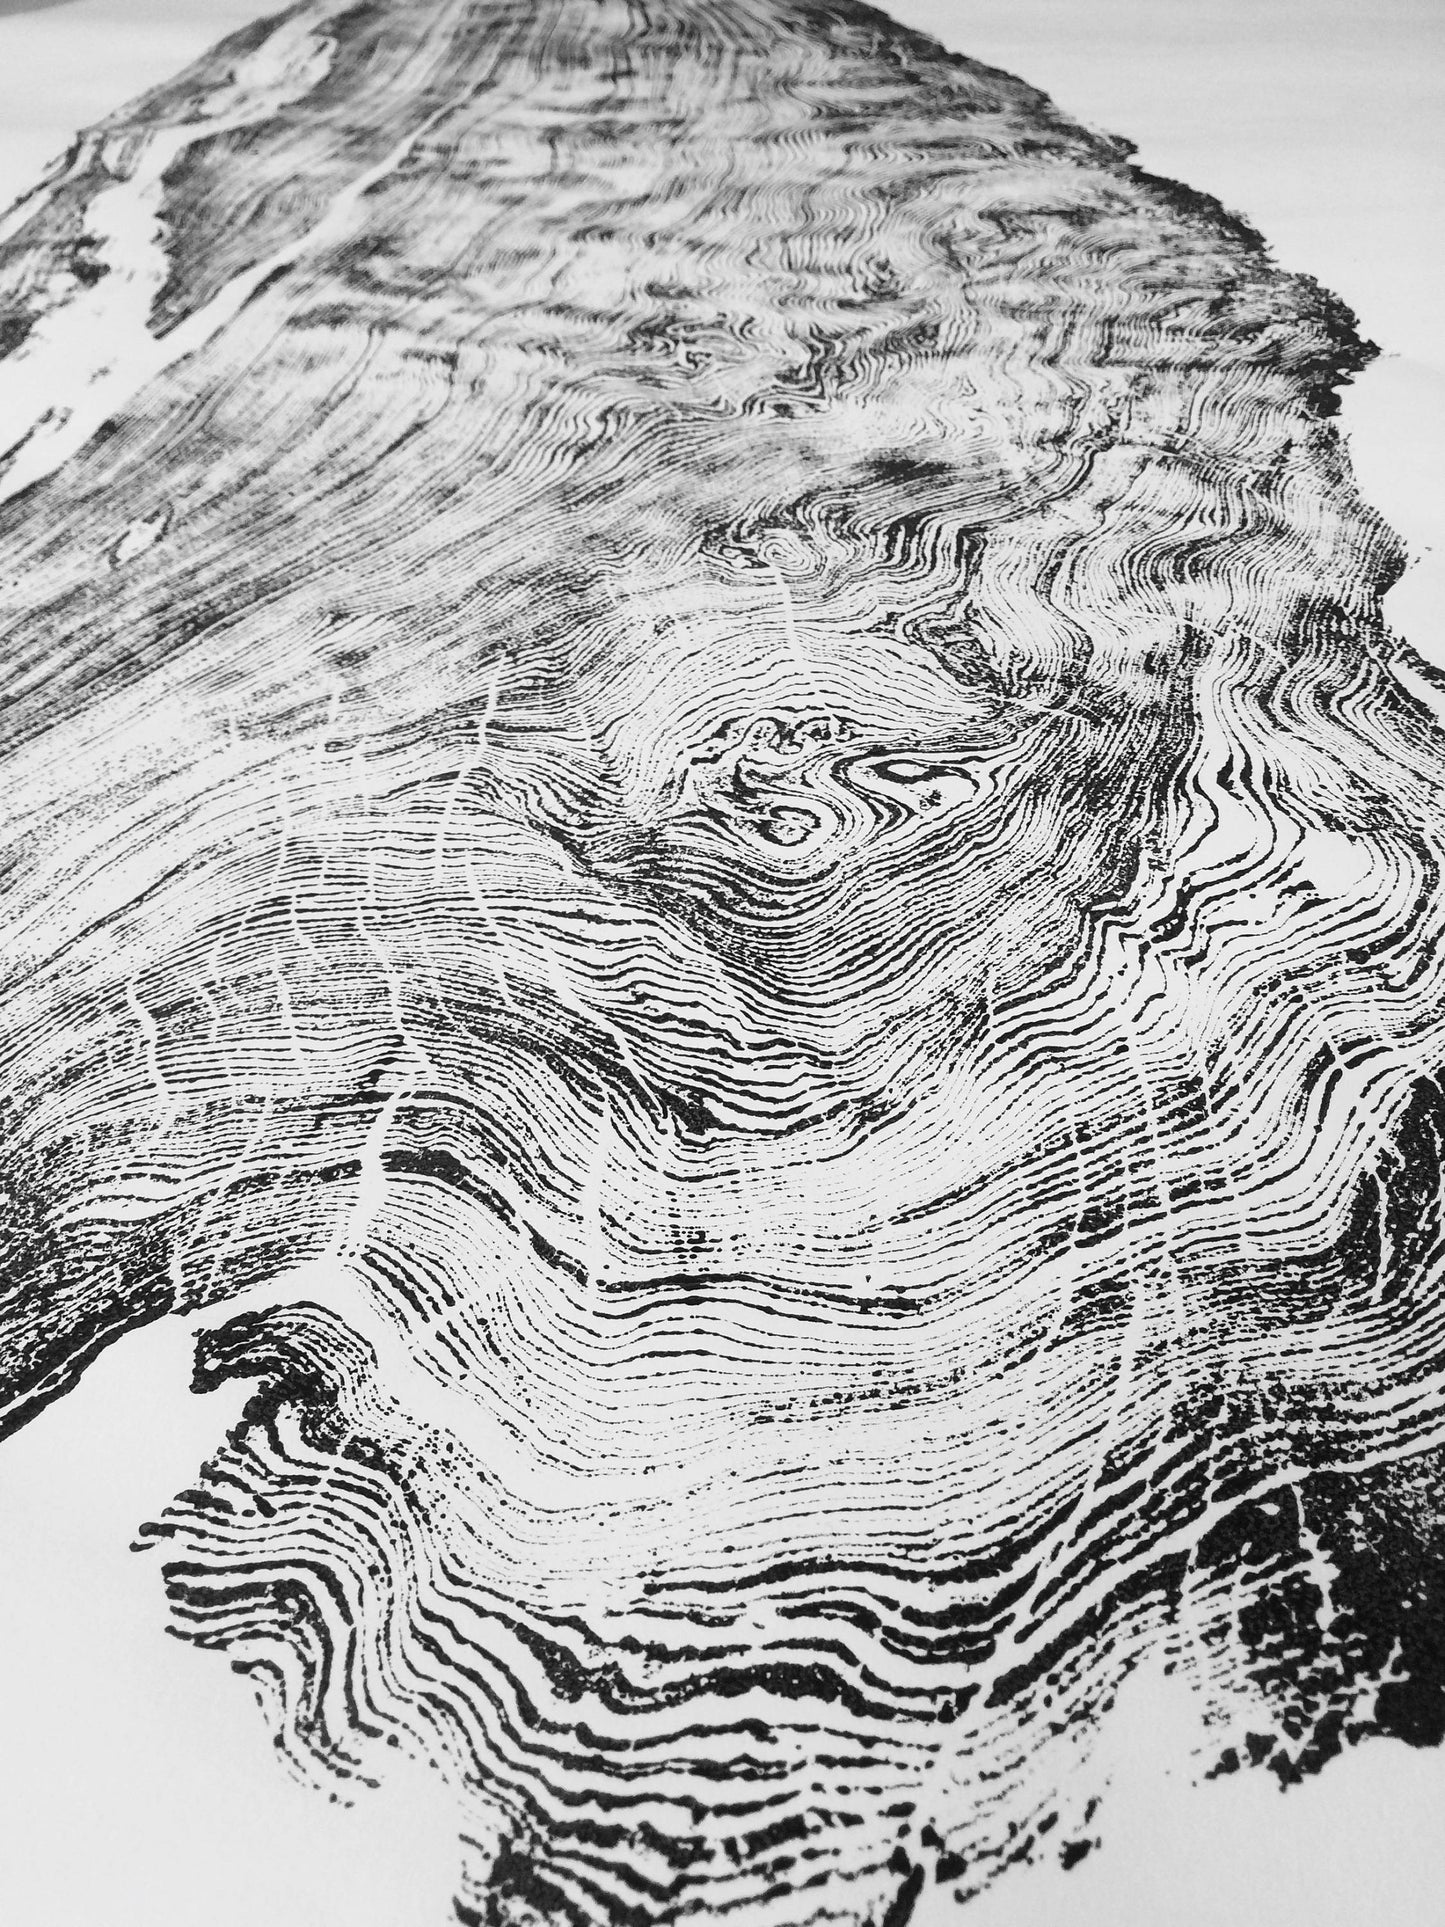 Giant Redwood, Orick Area California - 3x6 feet print